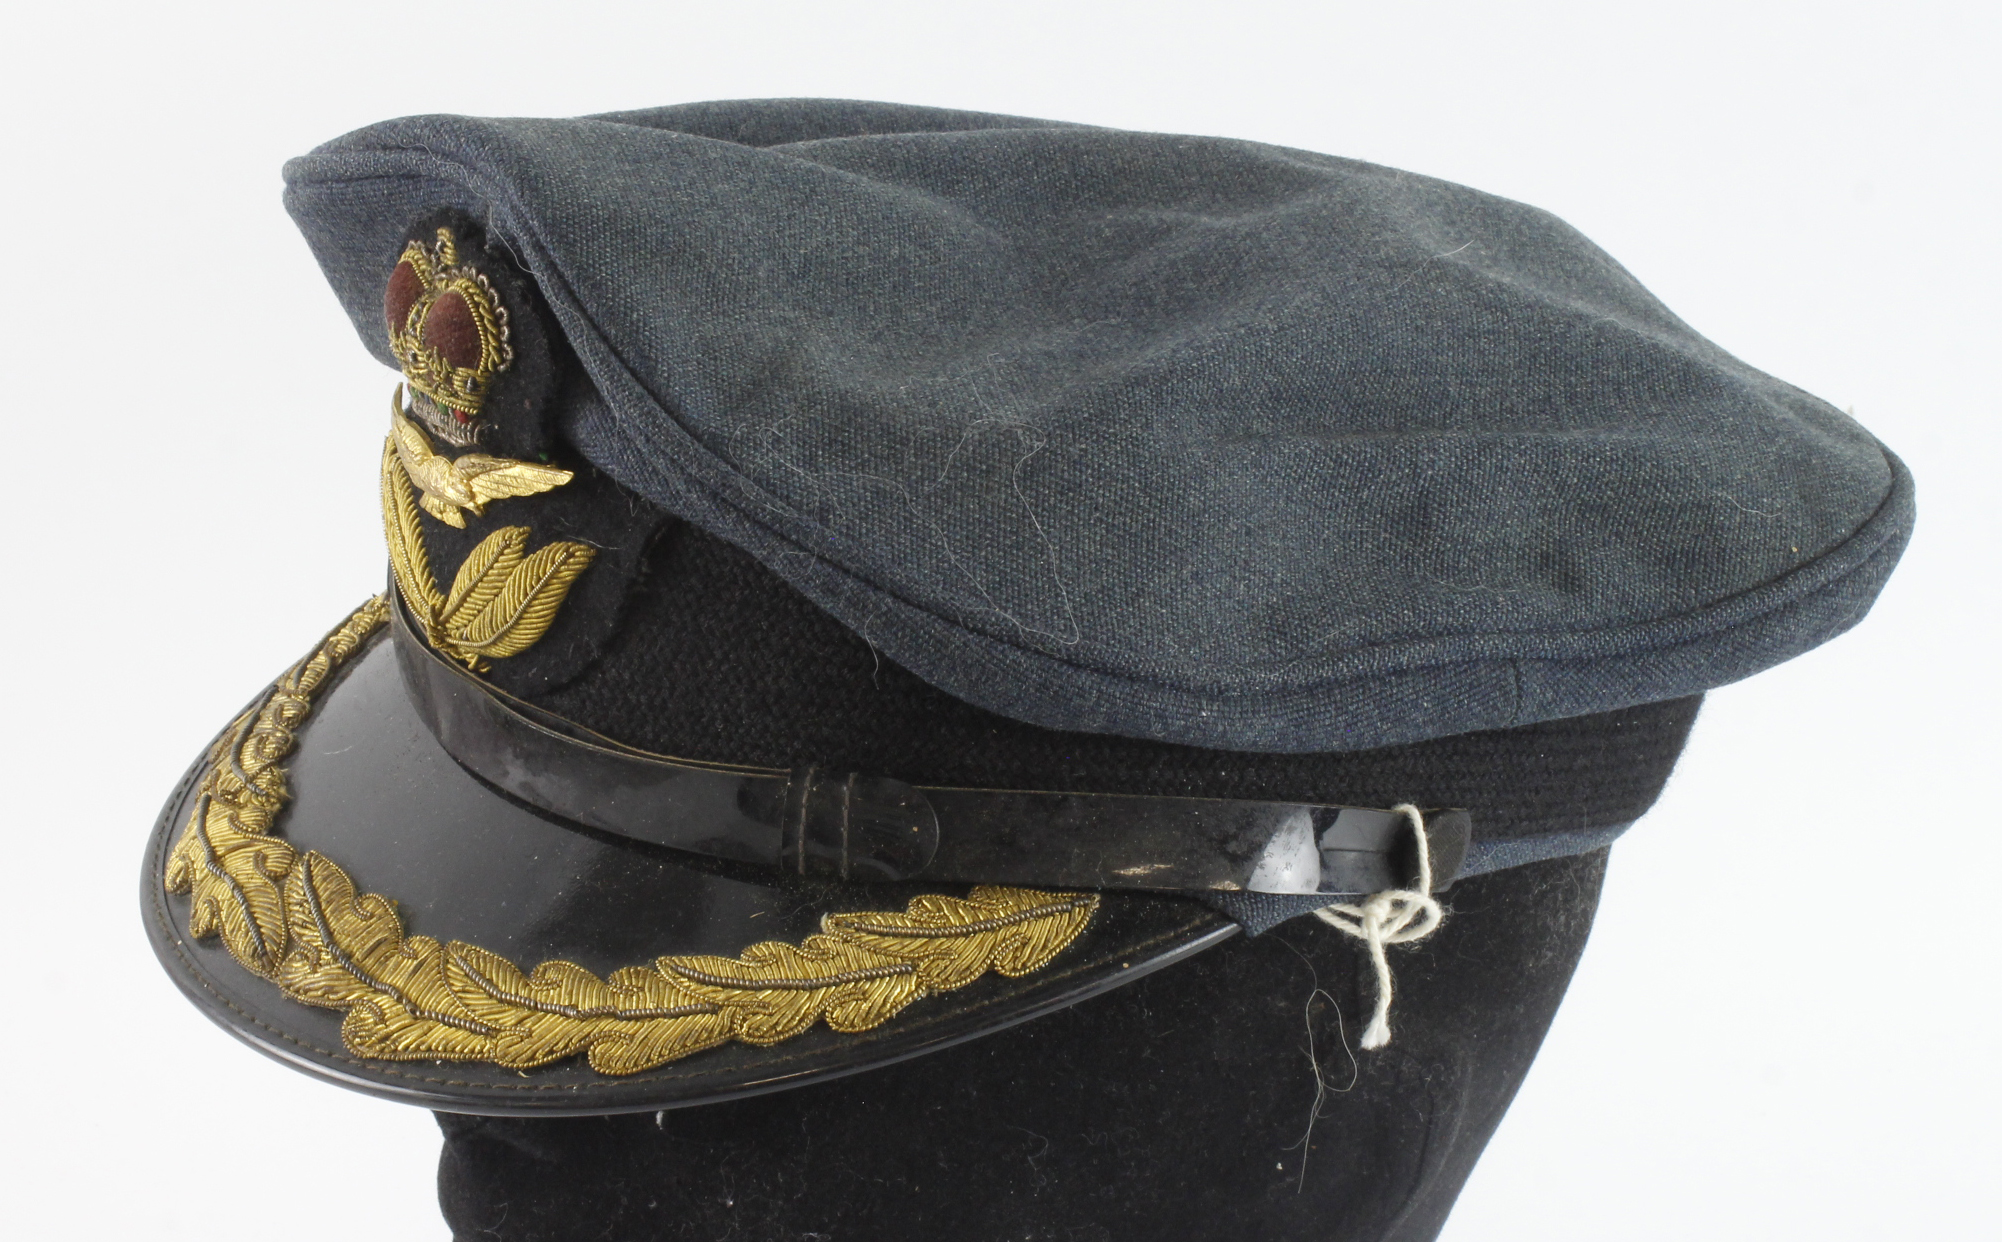 RAF post WW2 group captains hat belonged to K B Crosby.